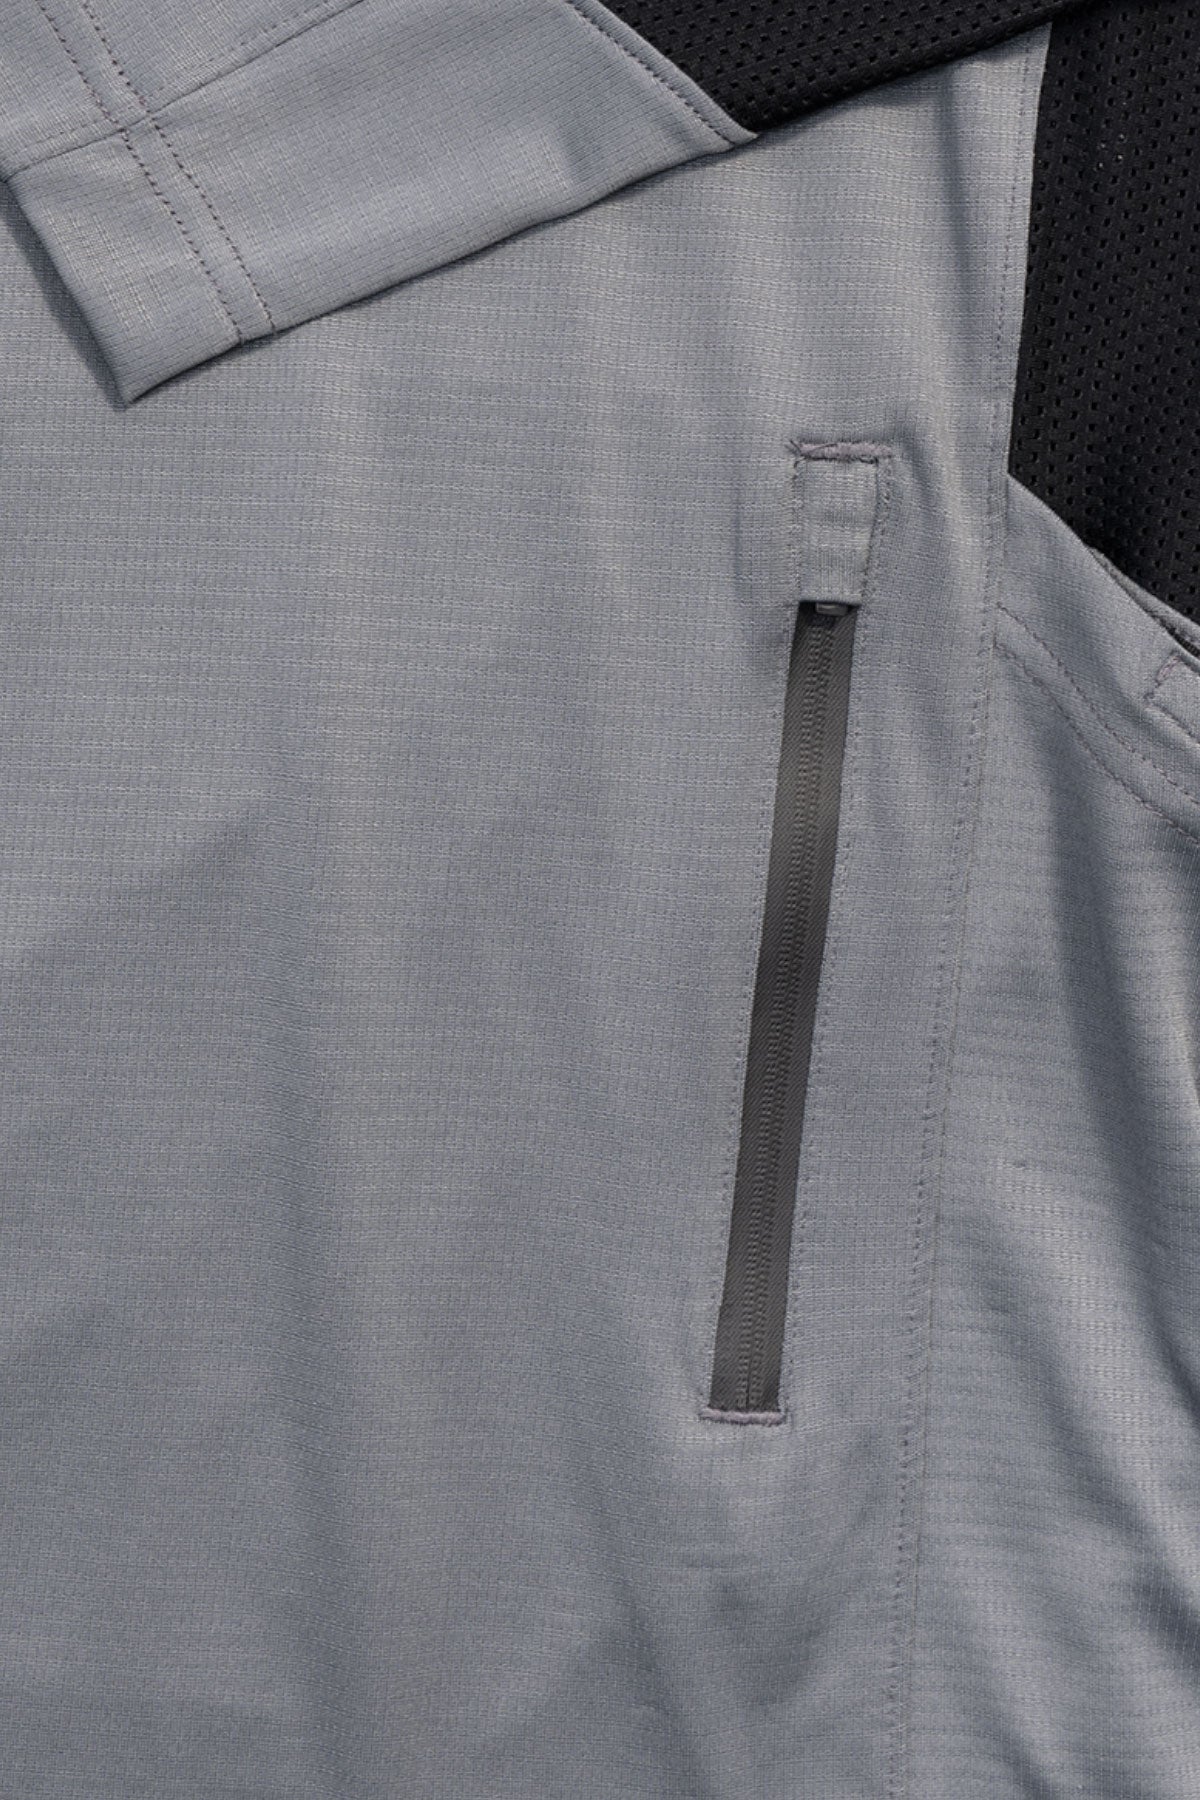 Argonaut Hooded Fishing Shirt -Grey - Stafu Pro Series